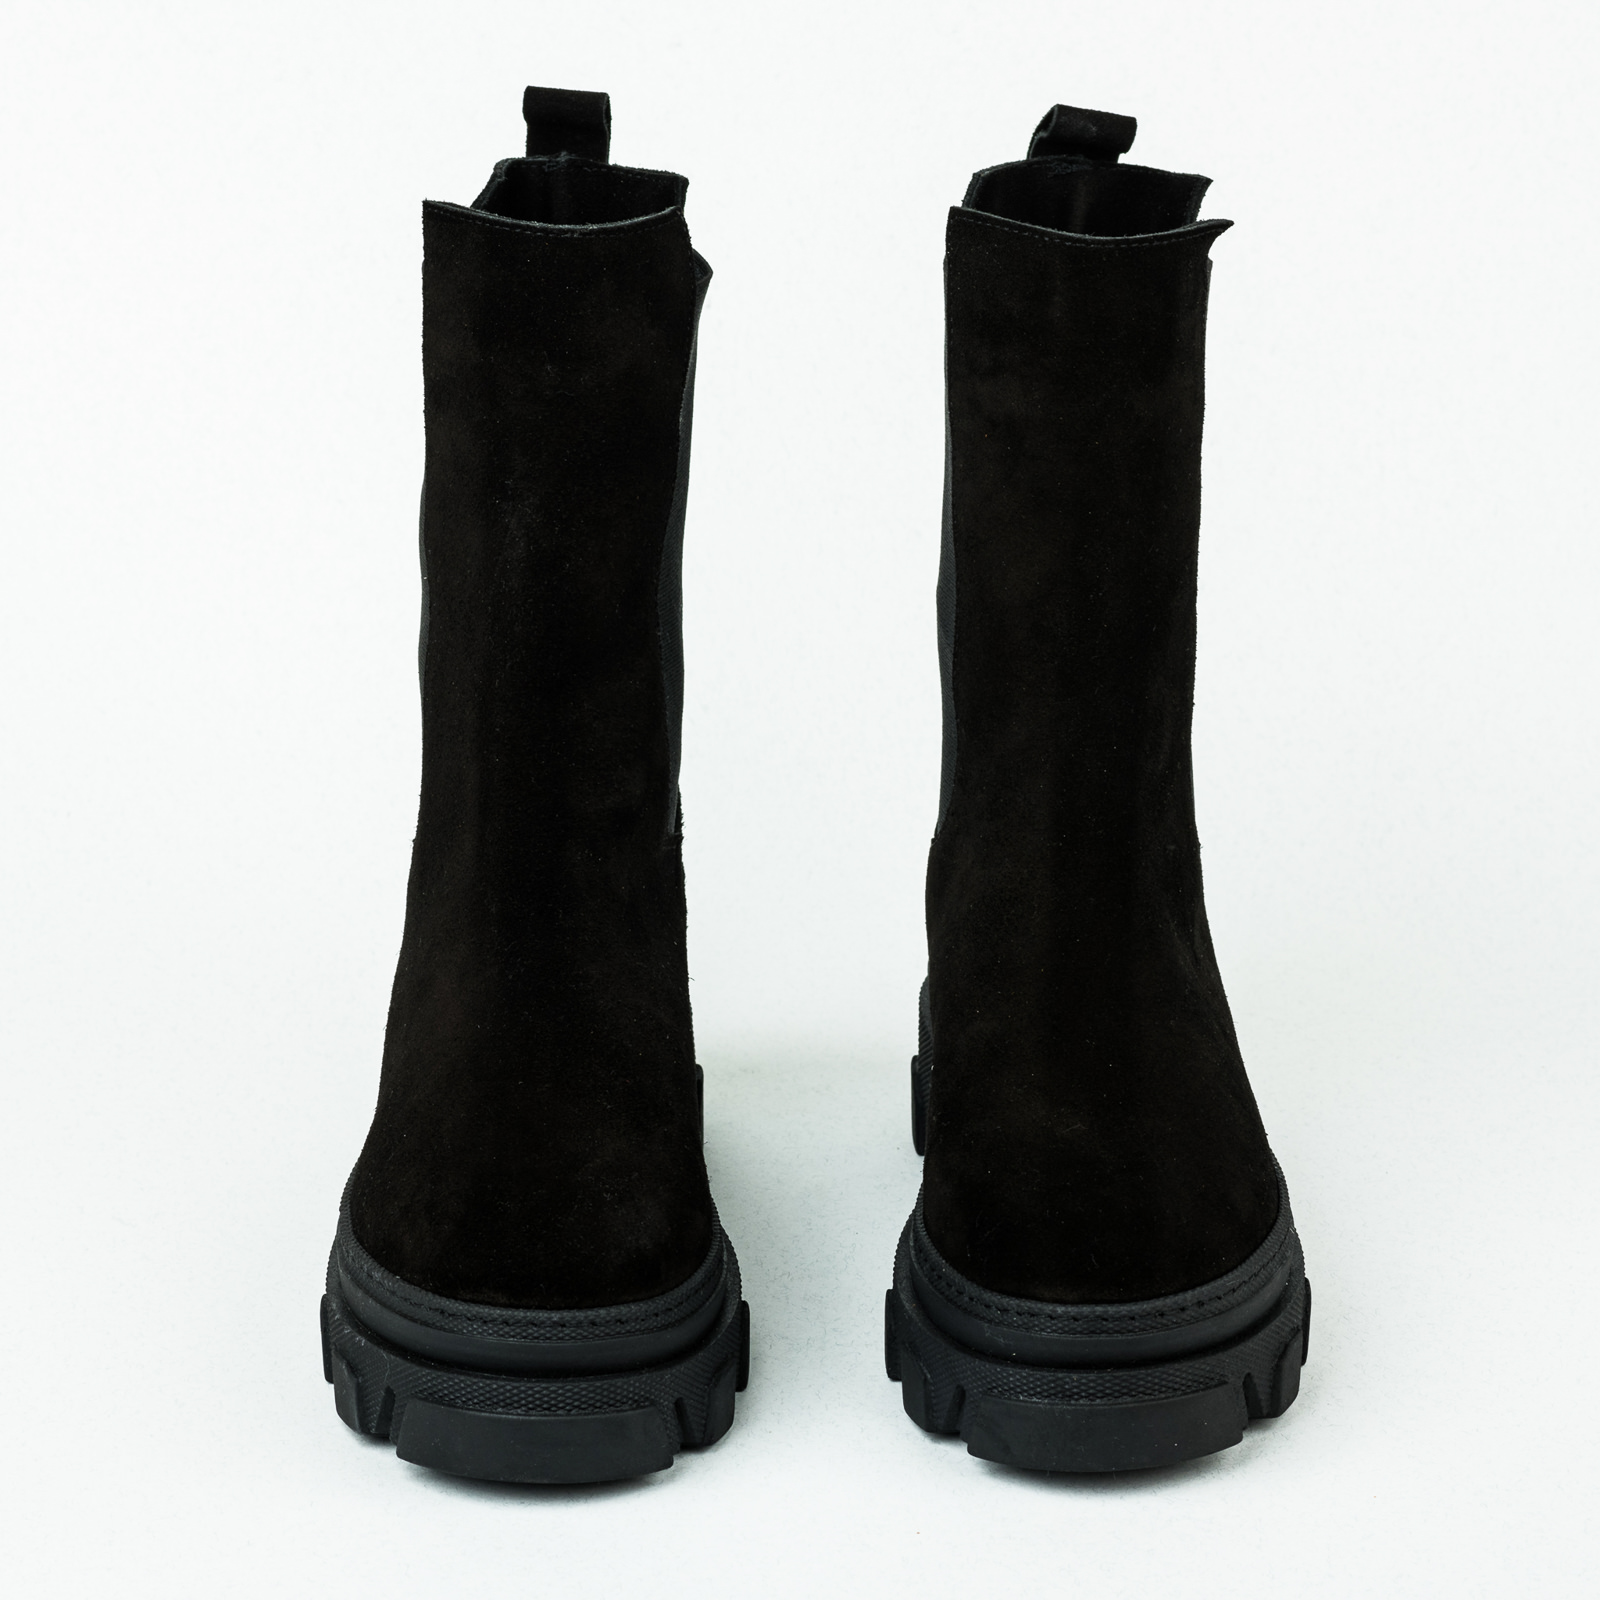 Leather WATERPROOF boots B079 - BLACK